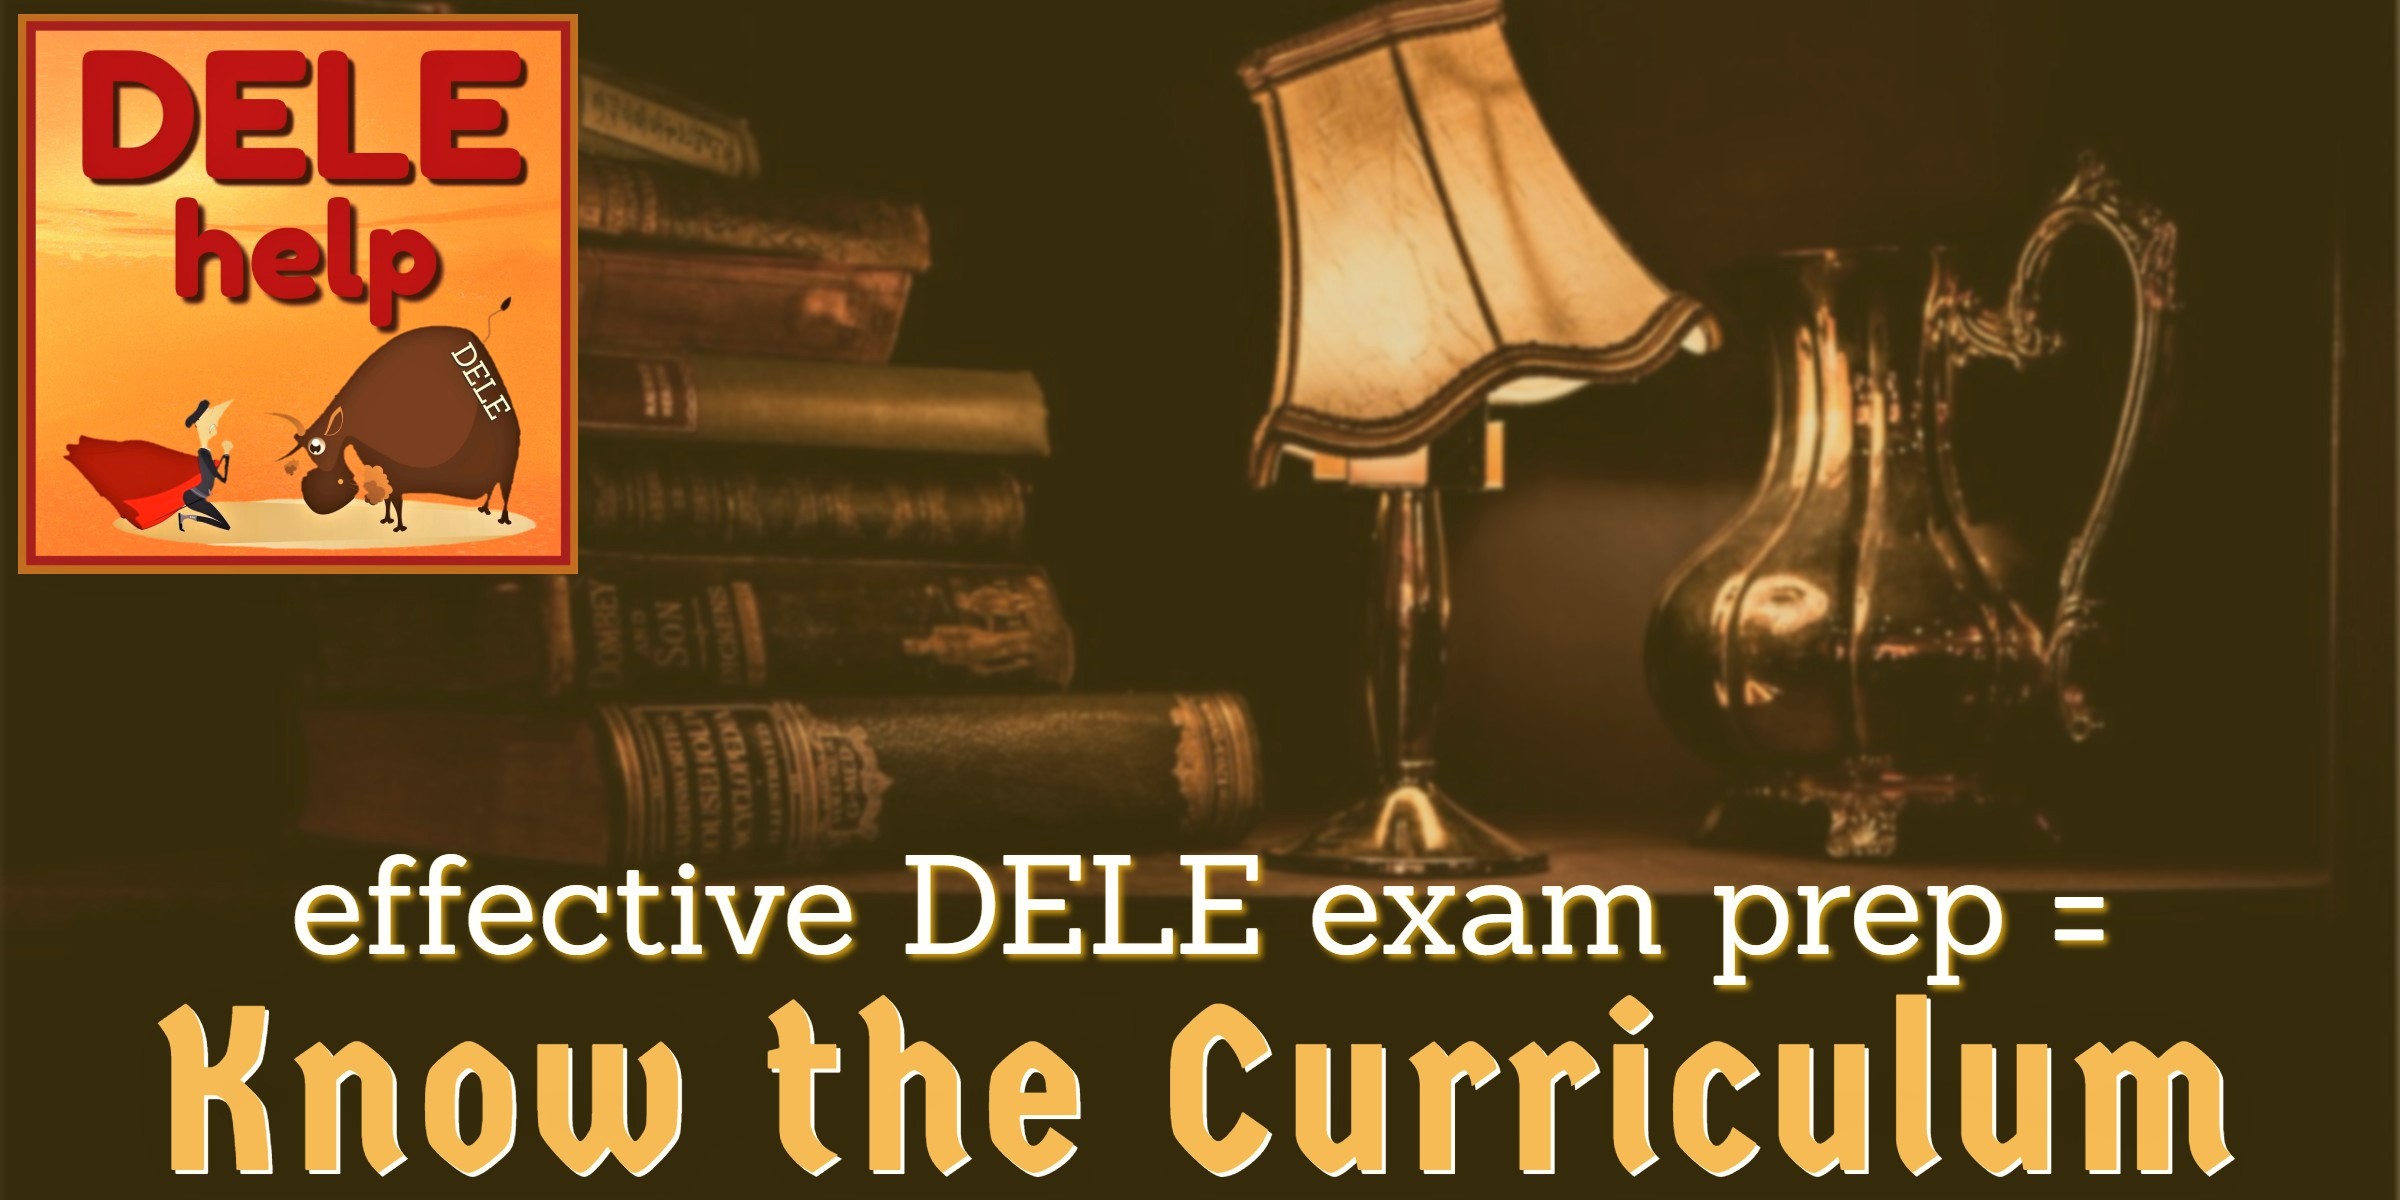 Focus your DELE / SIELE / OPI exam prep